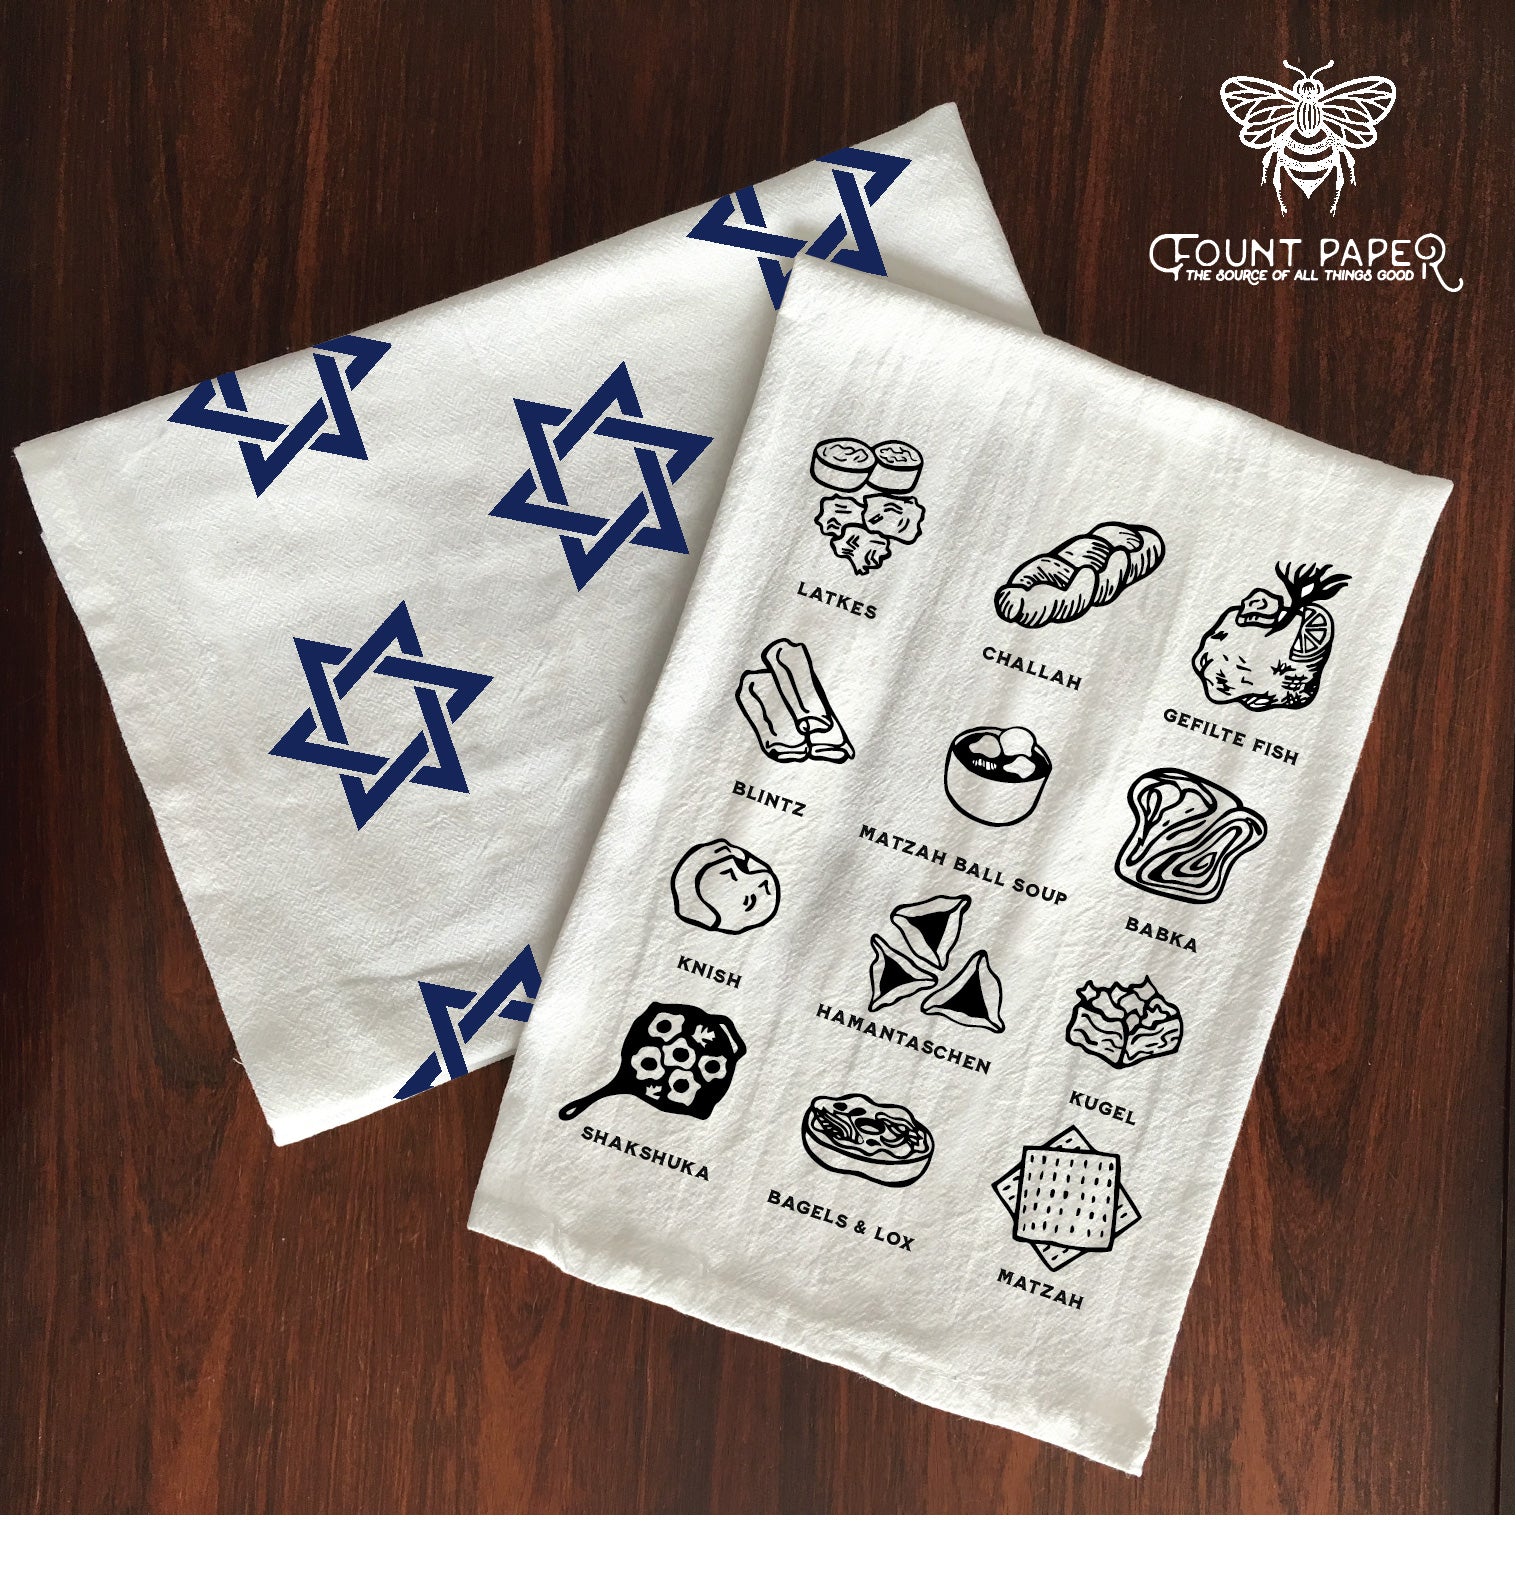 Jewish foods tea towel printed with latkes, challah bread, gefilte fish, blintz, matzah ball soup, babka, knish, hamantaschen, kugel, shakshuka, bagels and lox, and matzah and a Star of David tea towel